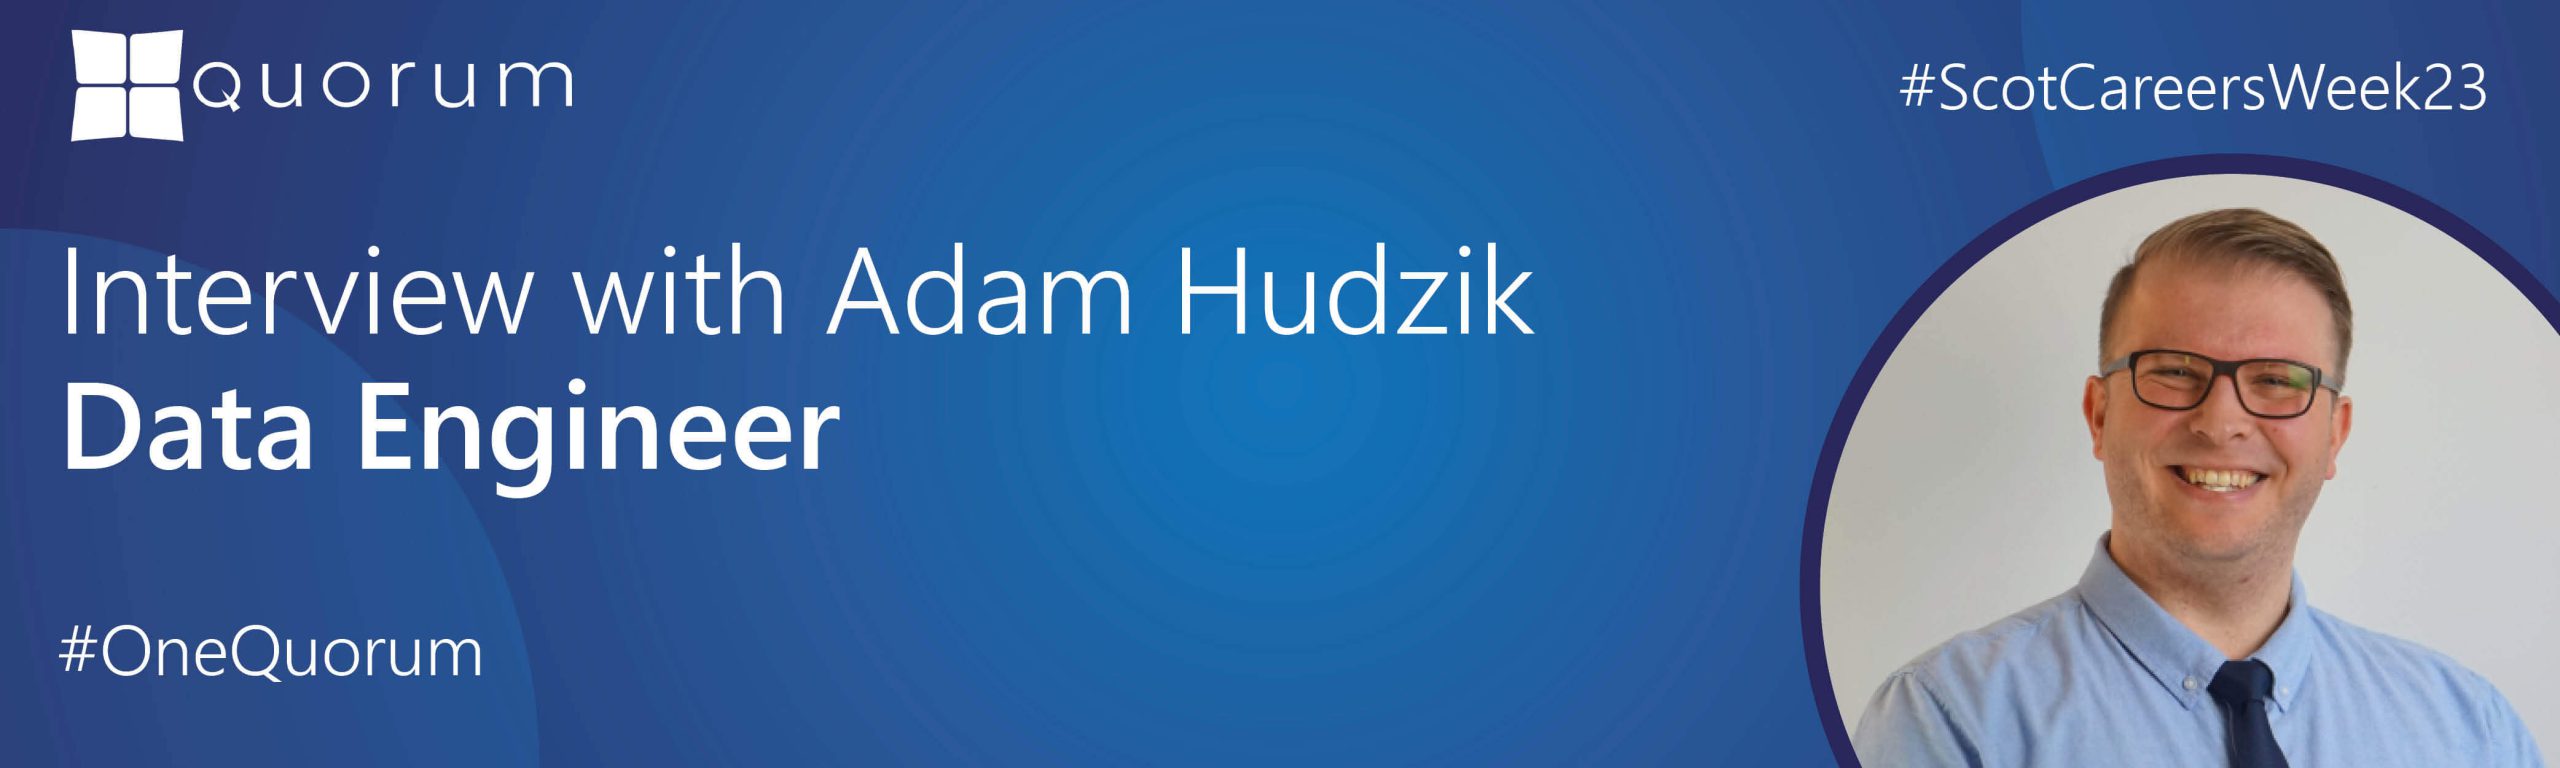 Website Banner Scottish Careers Week - Adam Hudzik